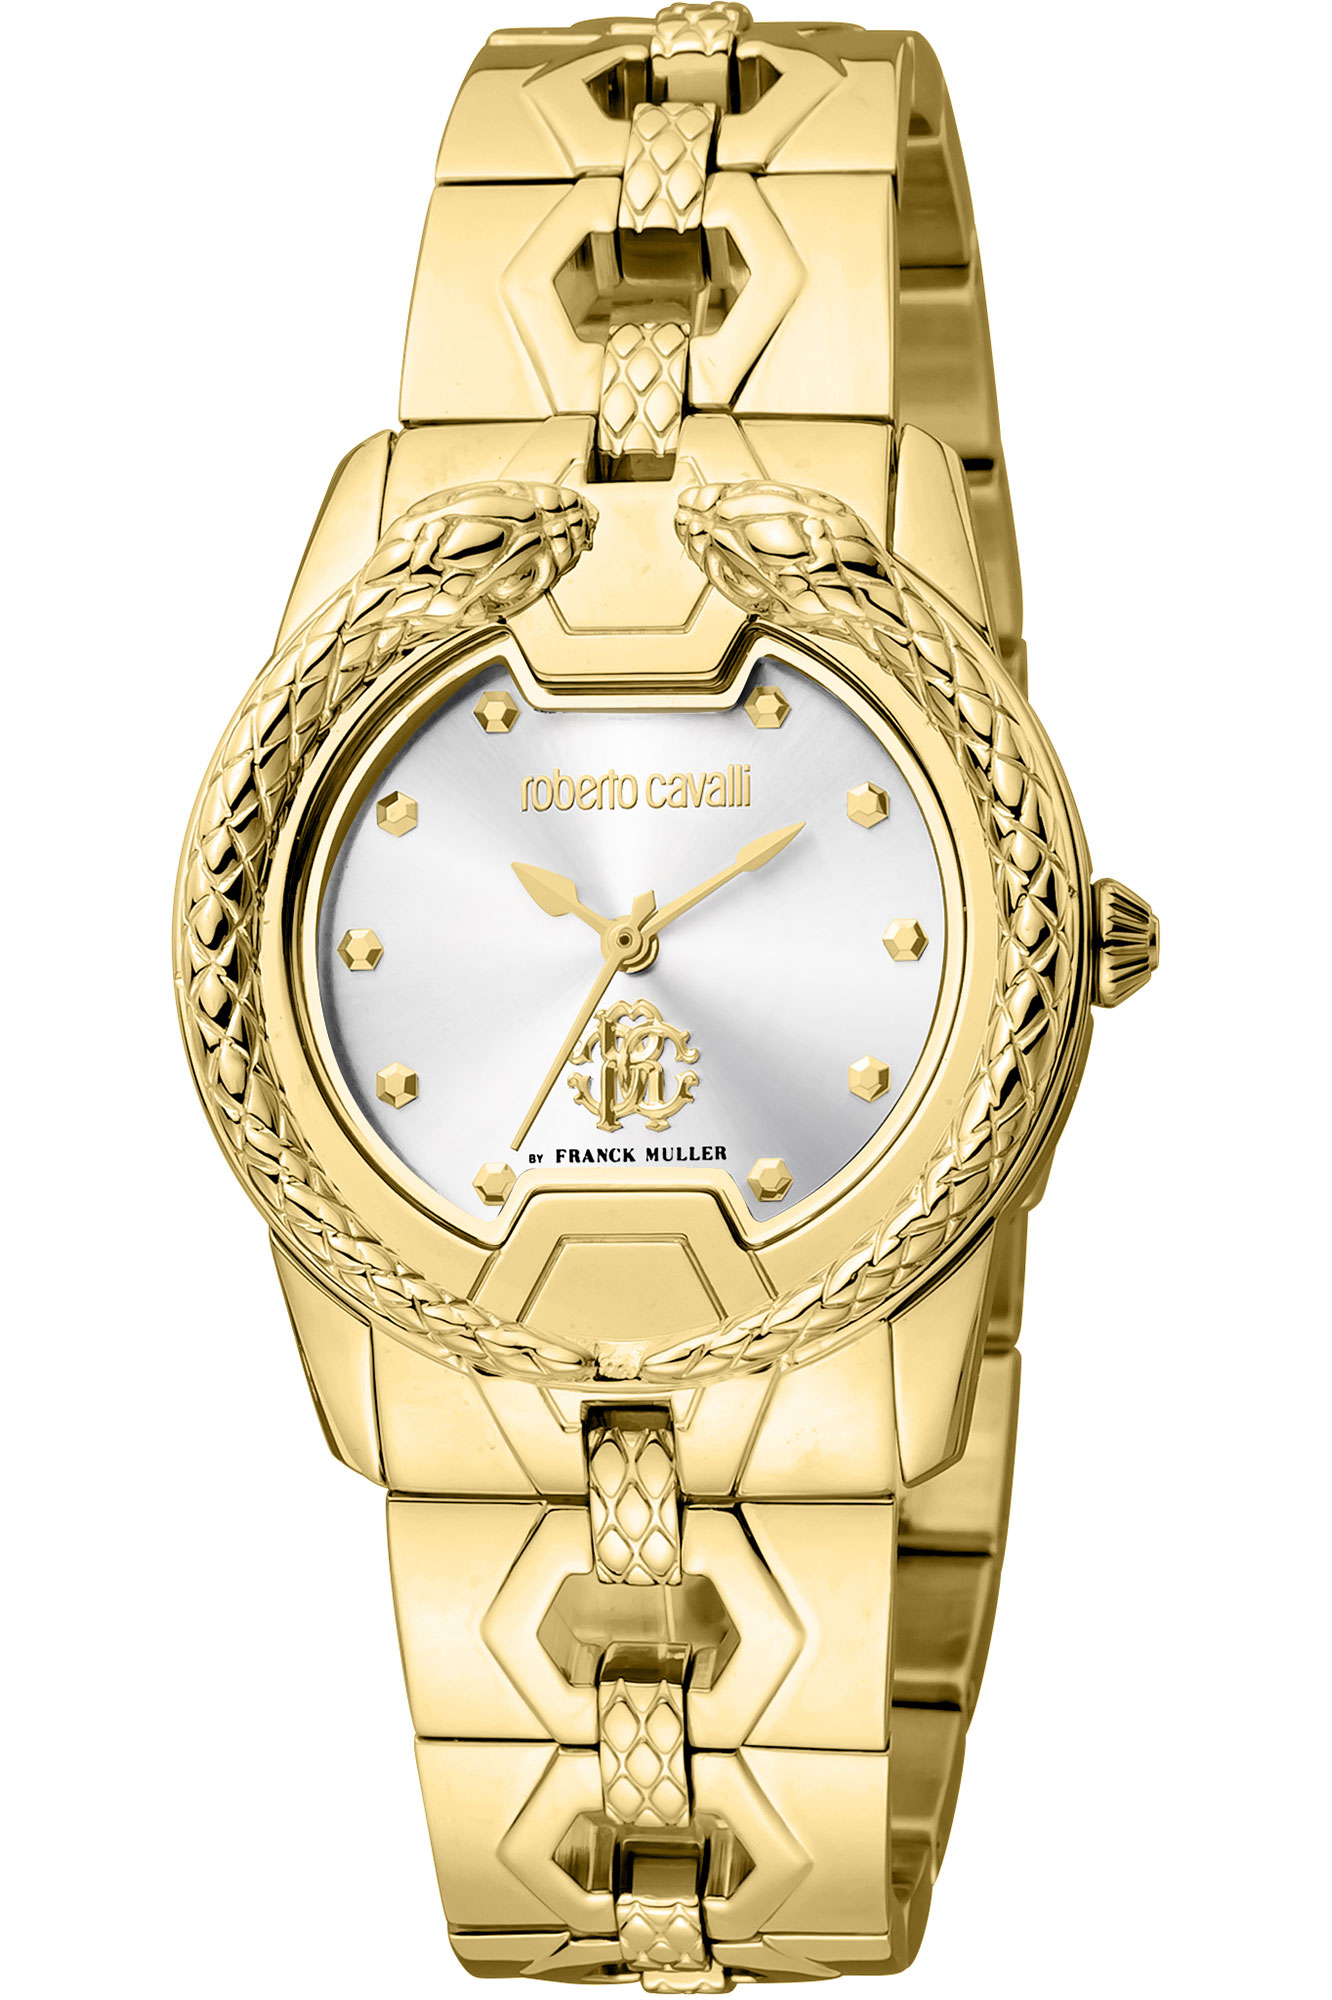 Reloj Roberto Cavalli by Franck Muller rv1l168m0021